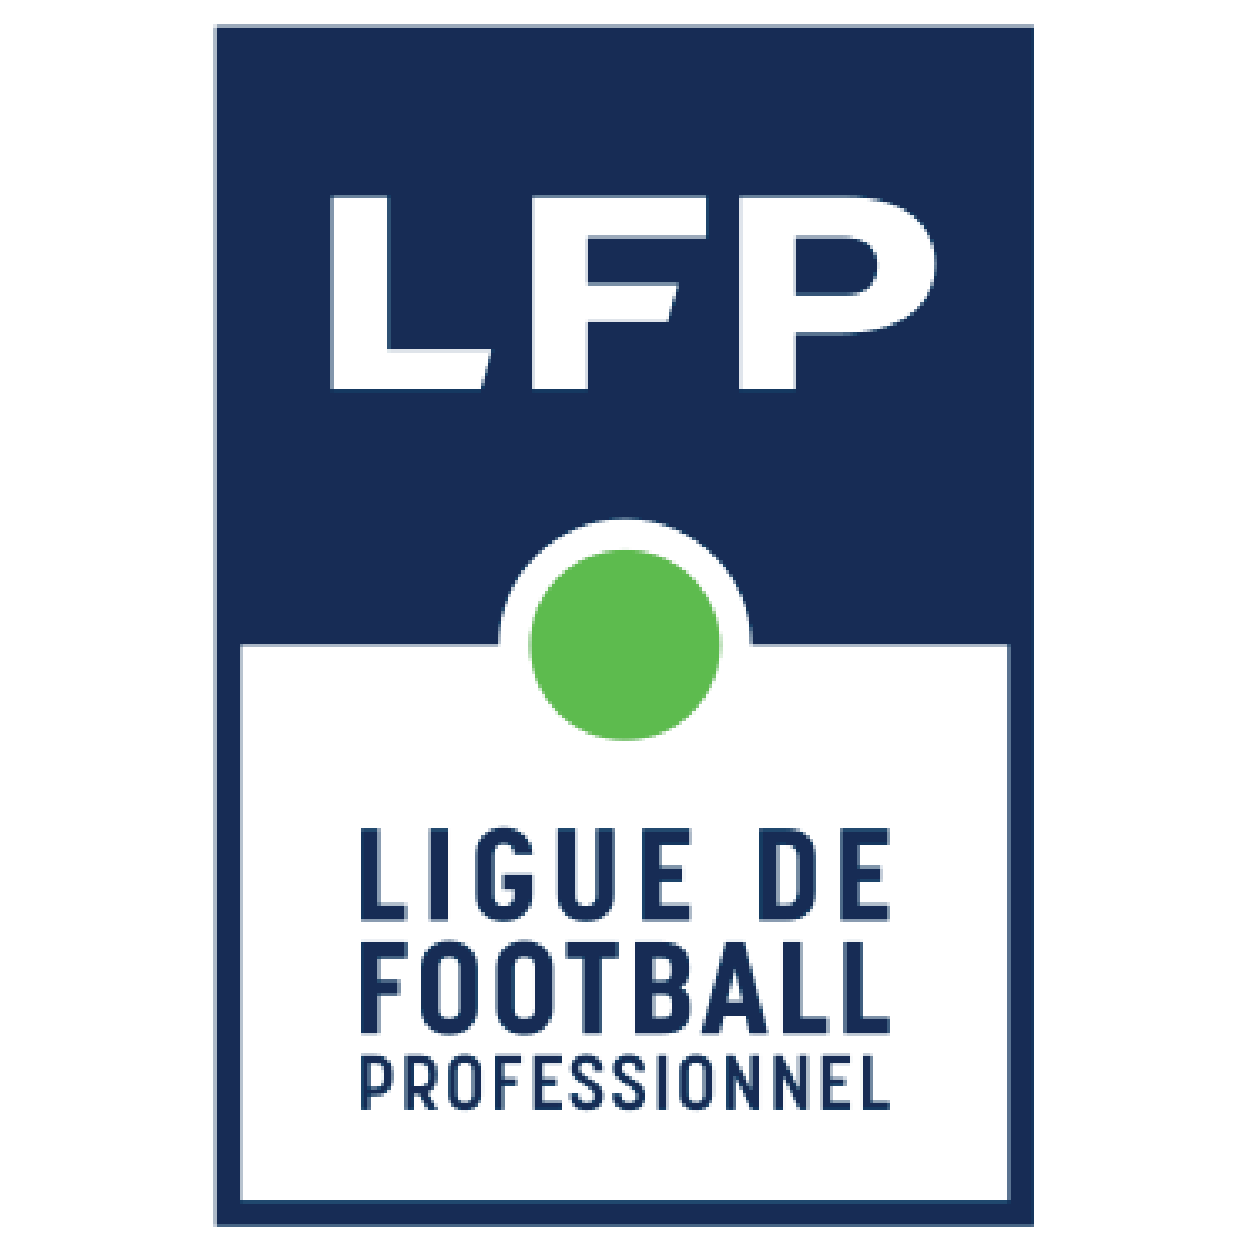 Lfp logo